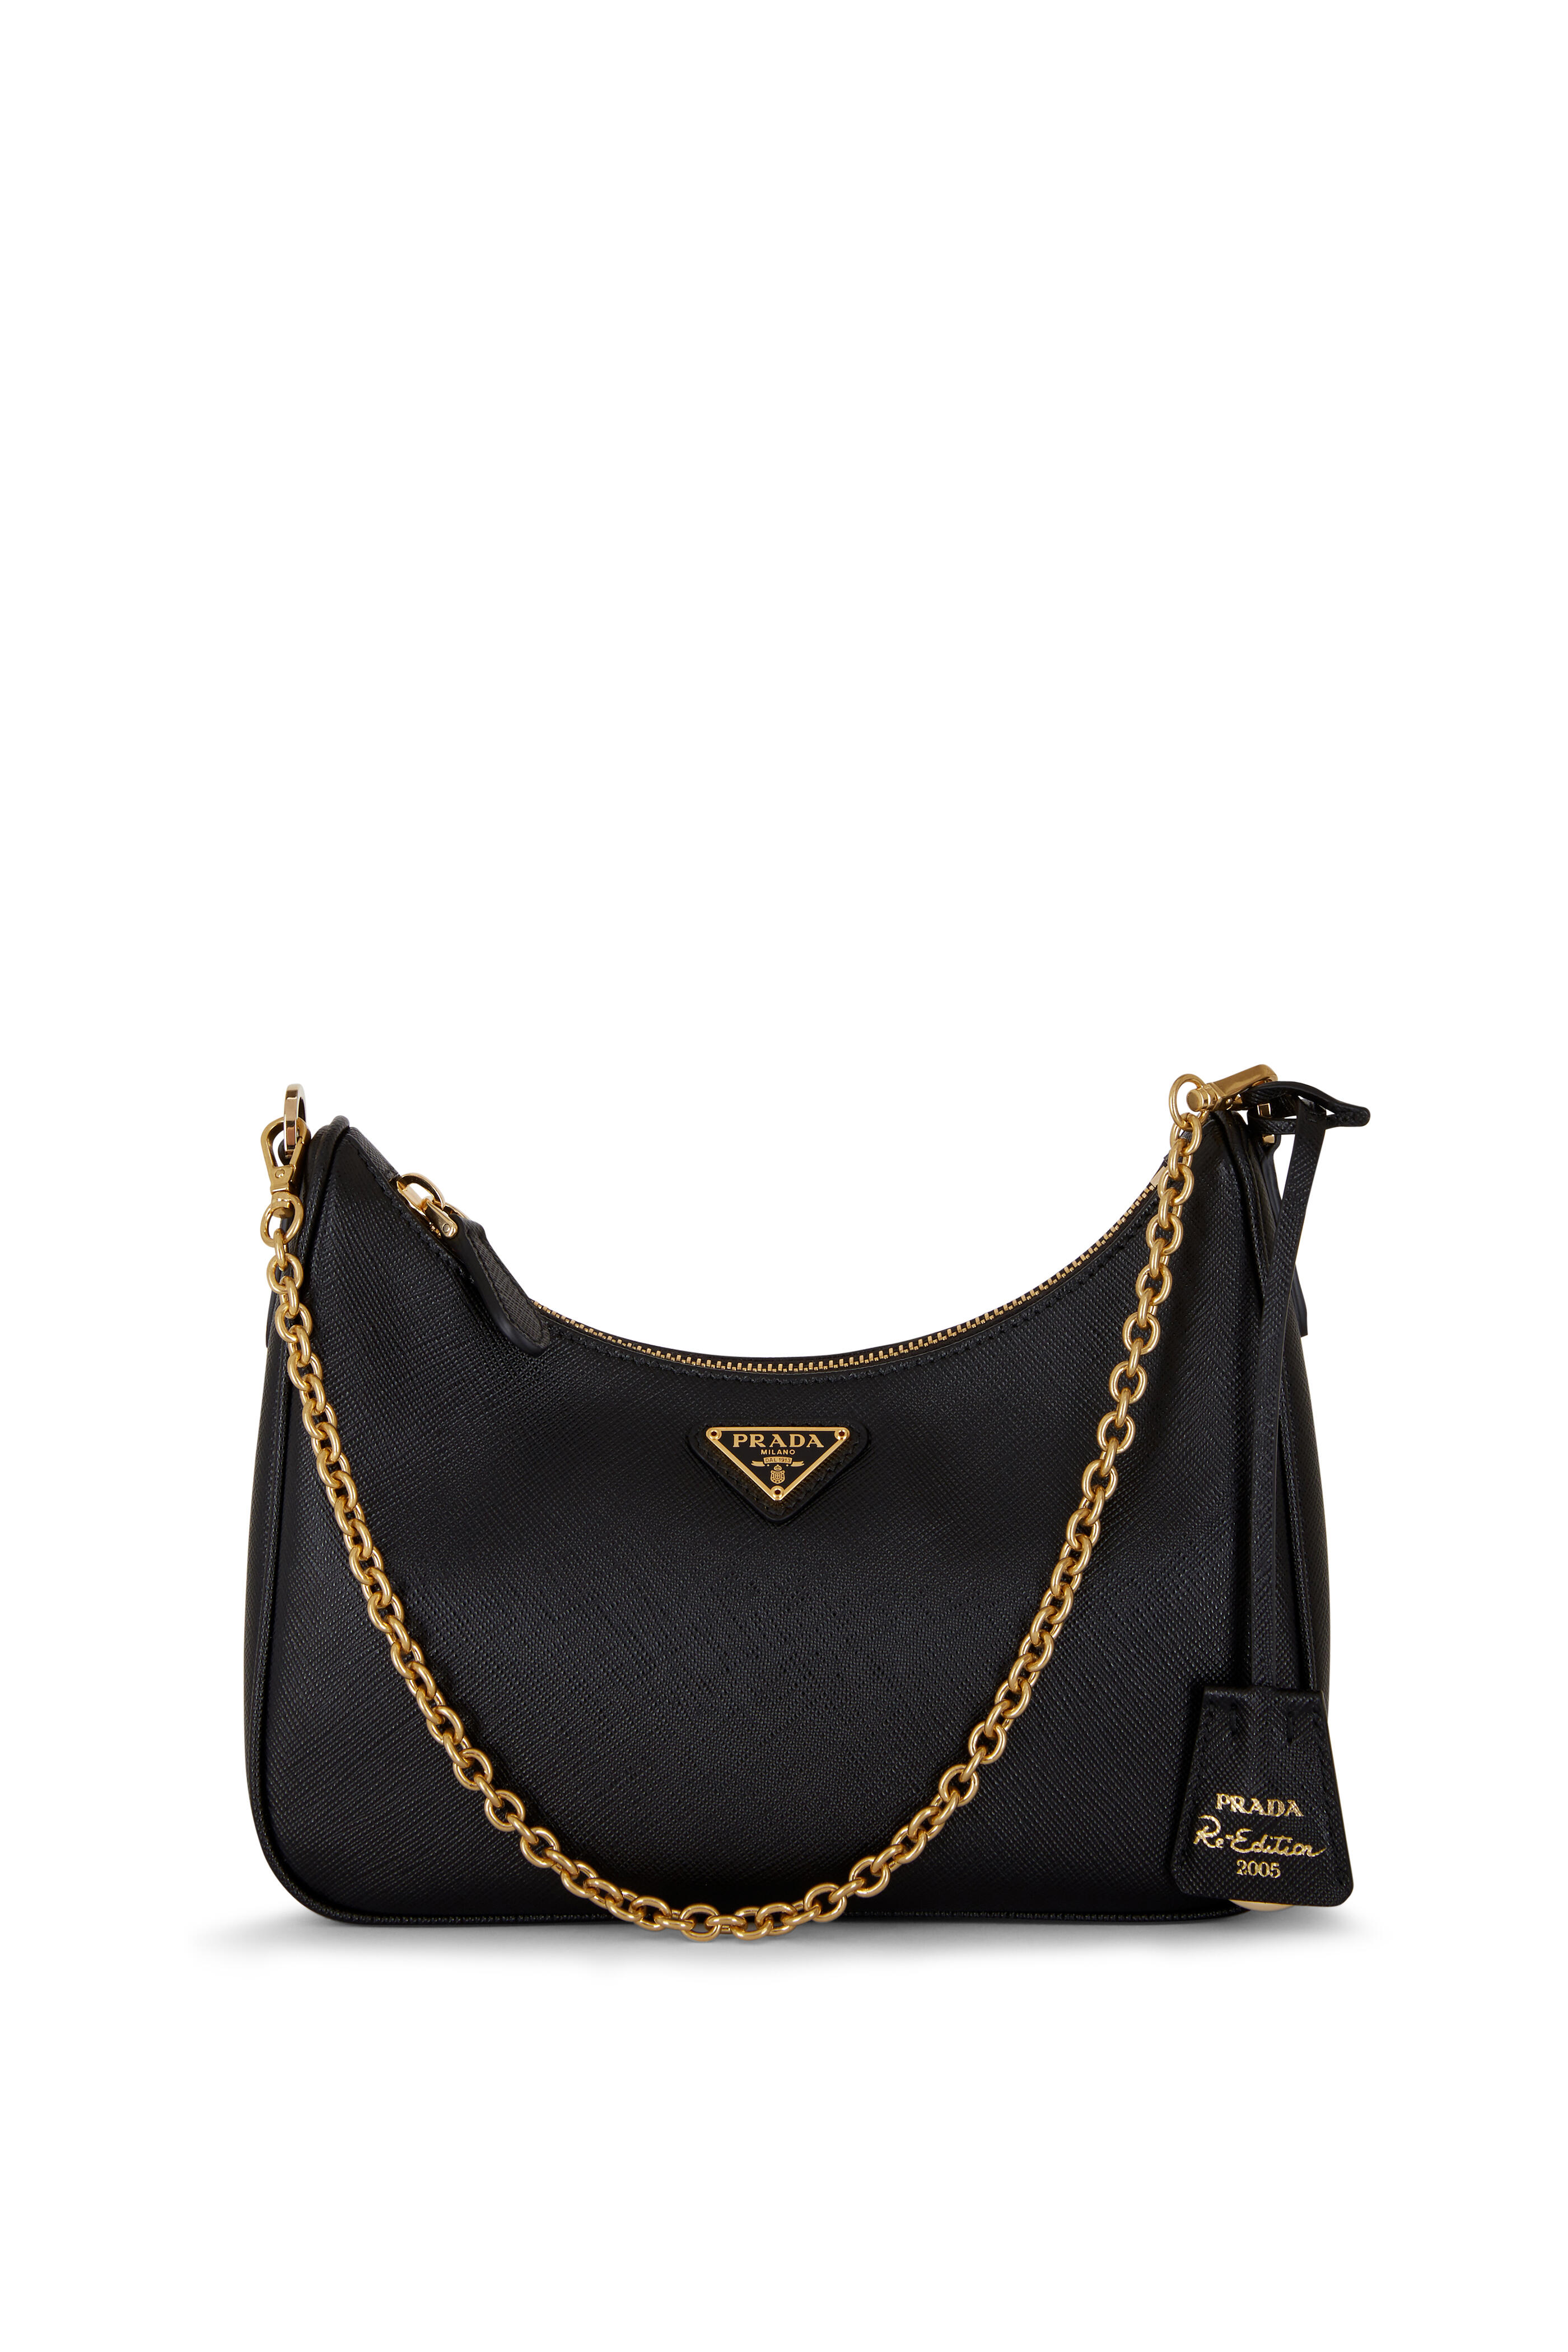 Prada - Black Saffiano Leather Zip Pouch Shoulder Bag